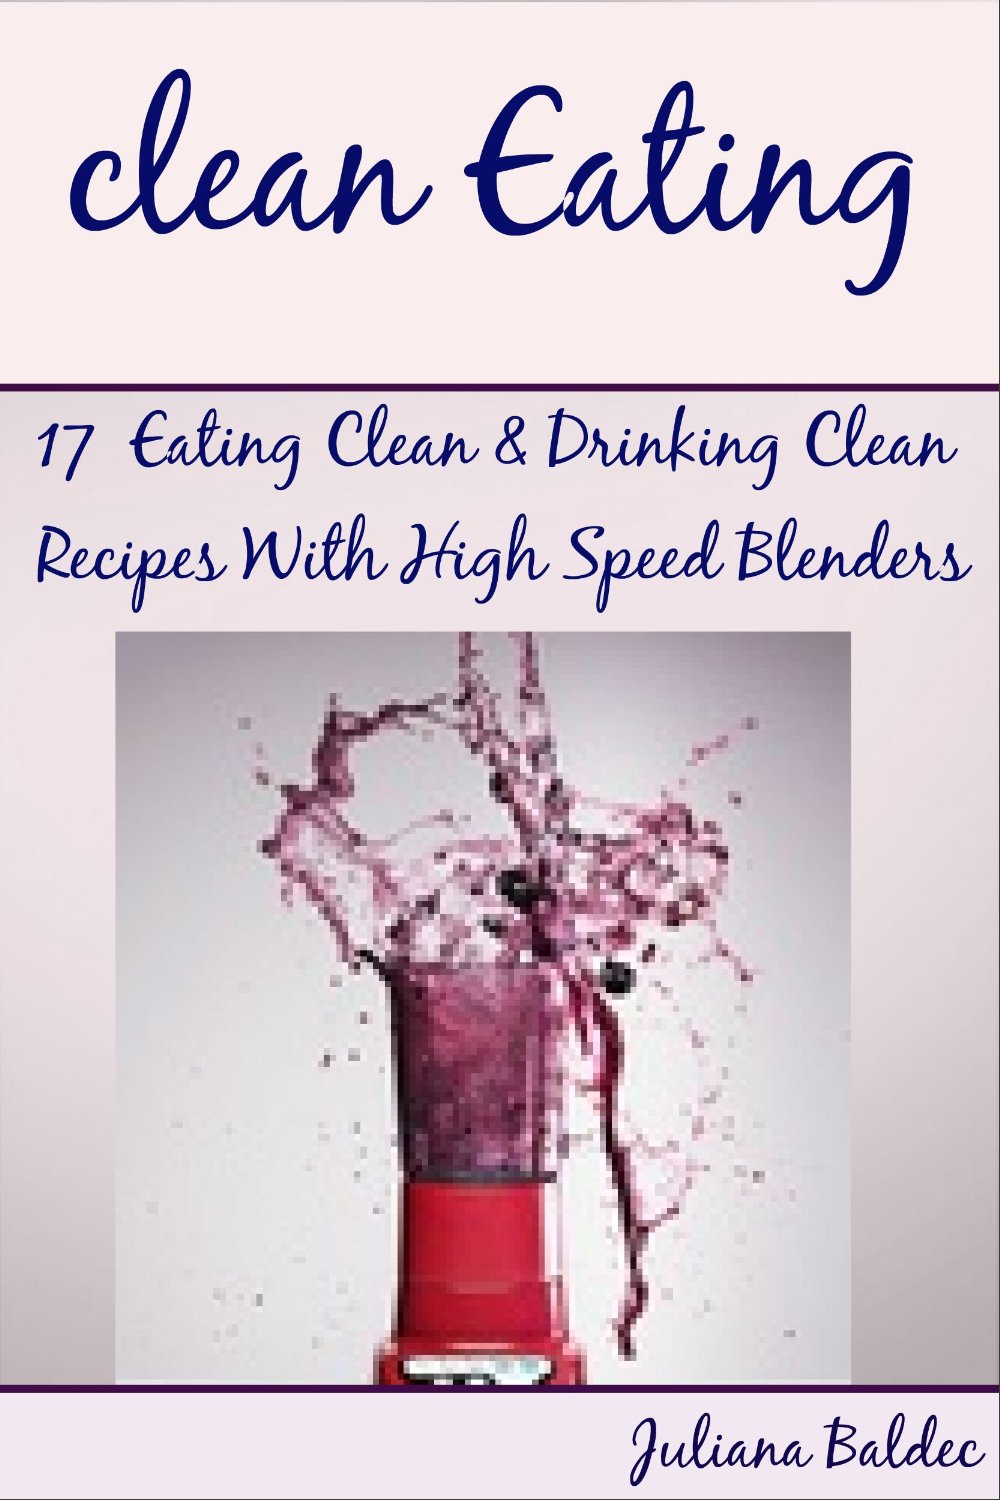 Clean Eating by Jeanne Hanser